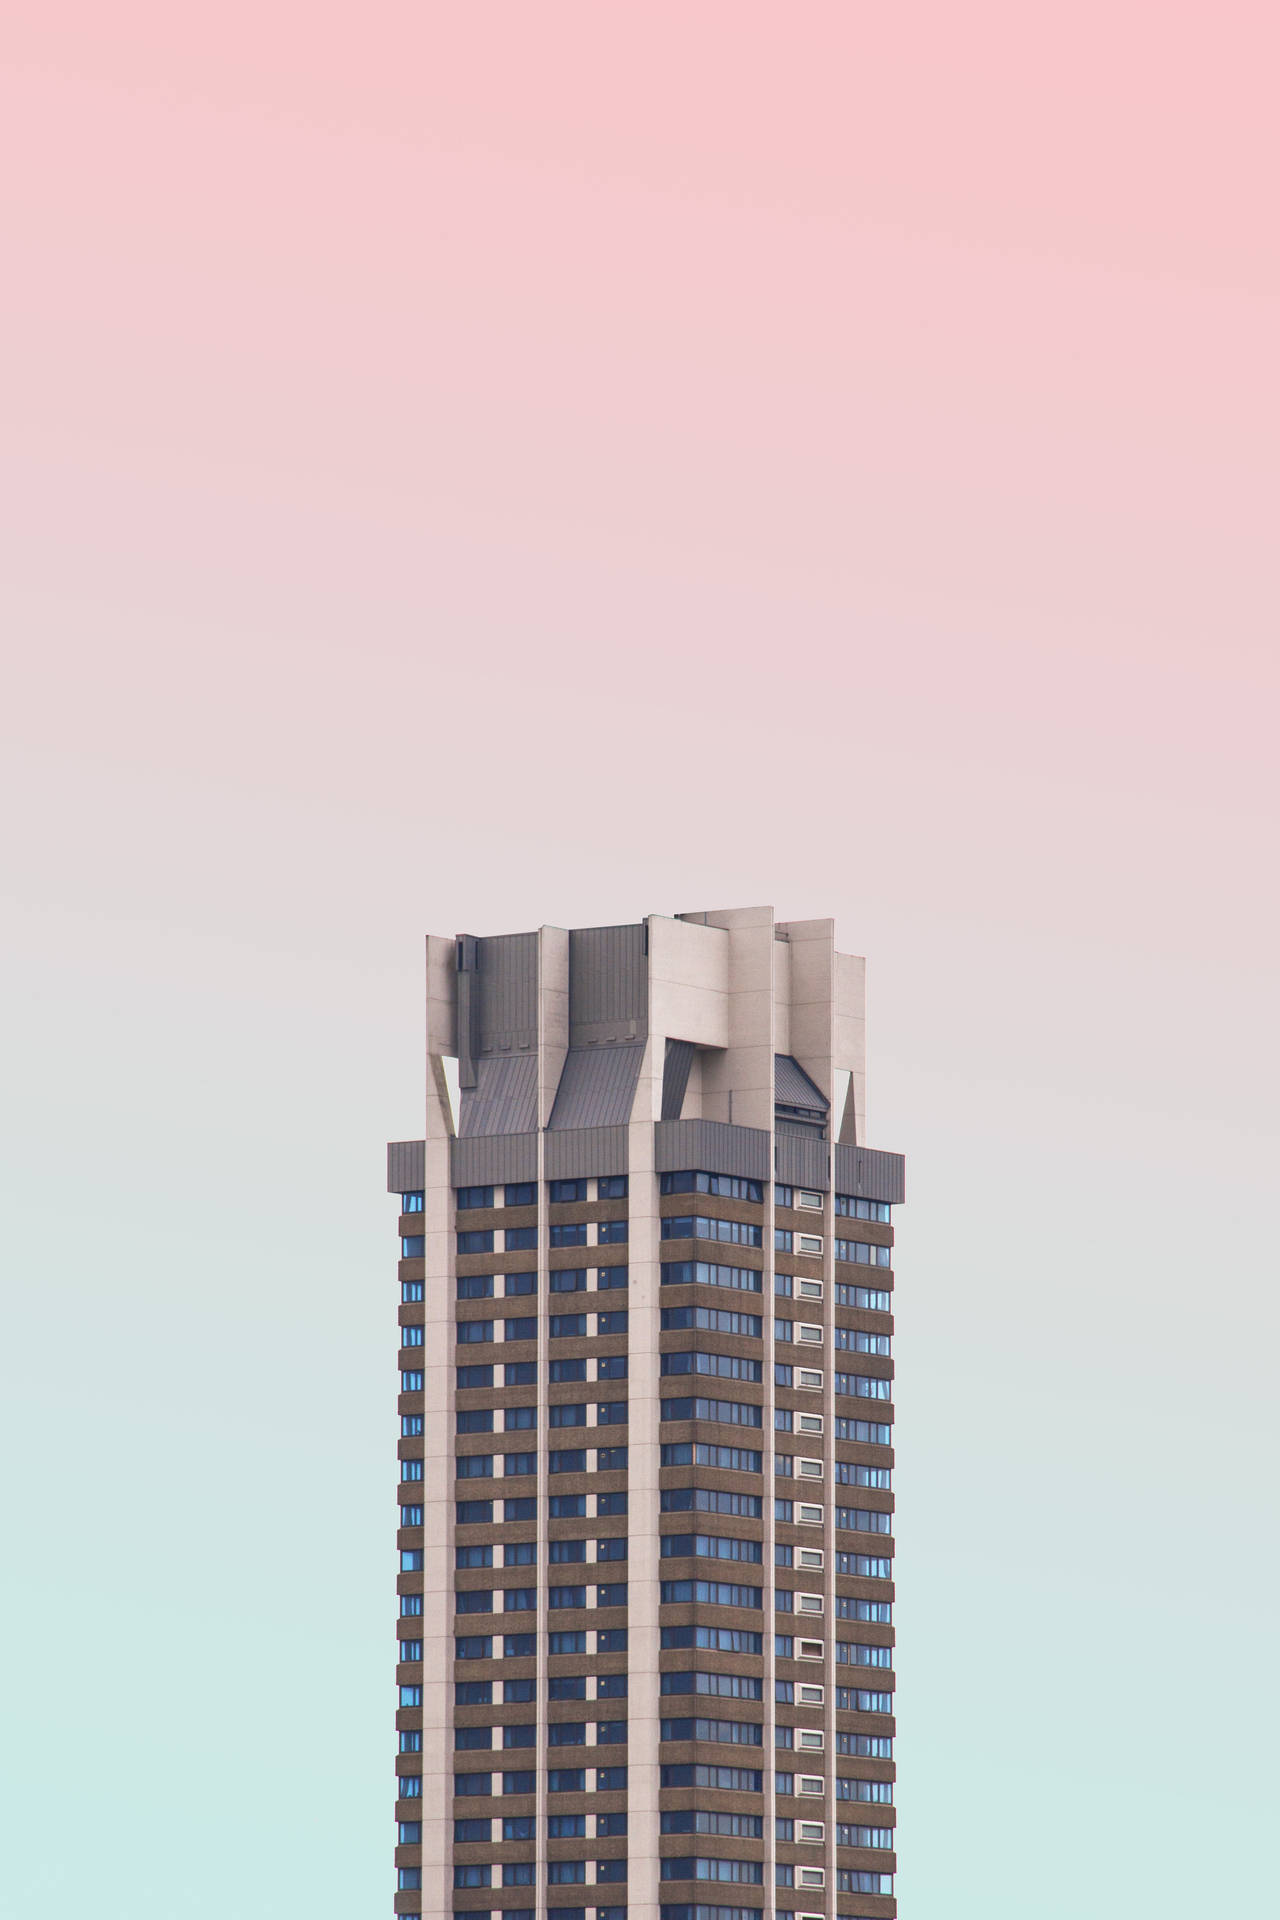 Basil Spence Skyscraper Uk